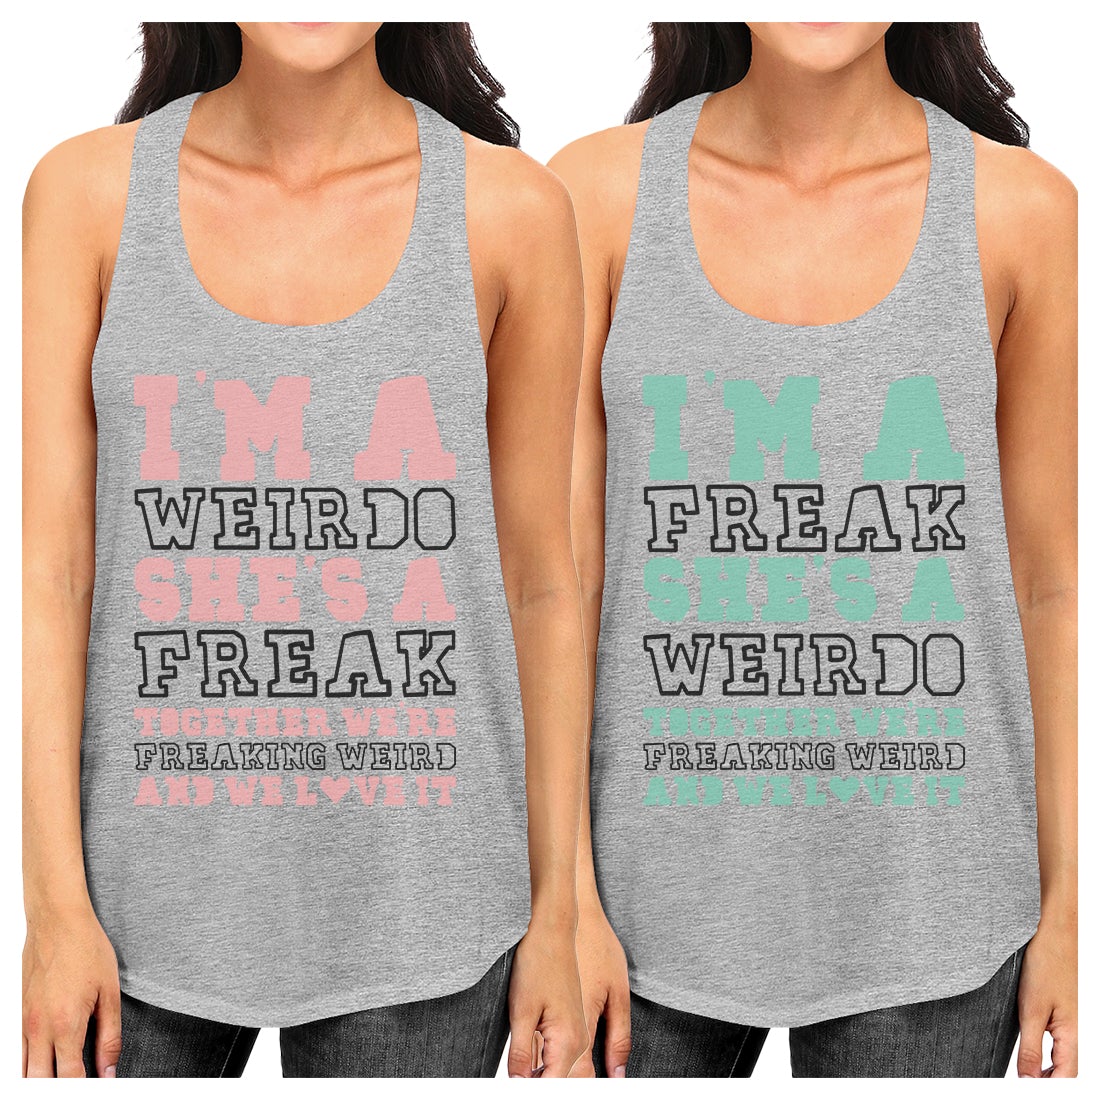 Weirdo Freak Best Friend Gift Shirts Womens Cute Graphic Tank Tops Gray